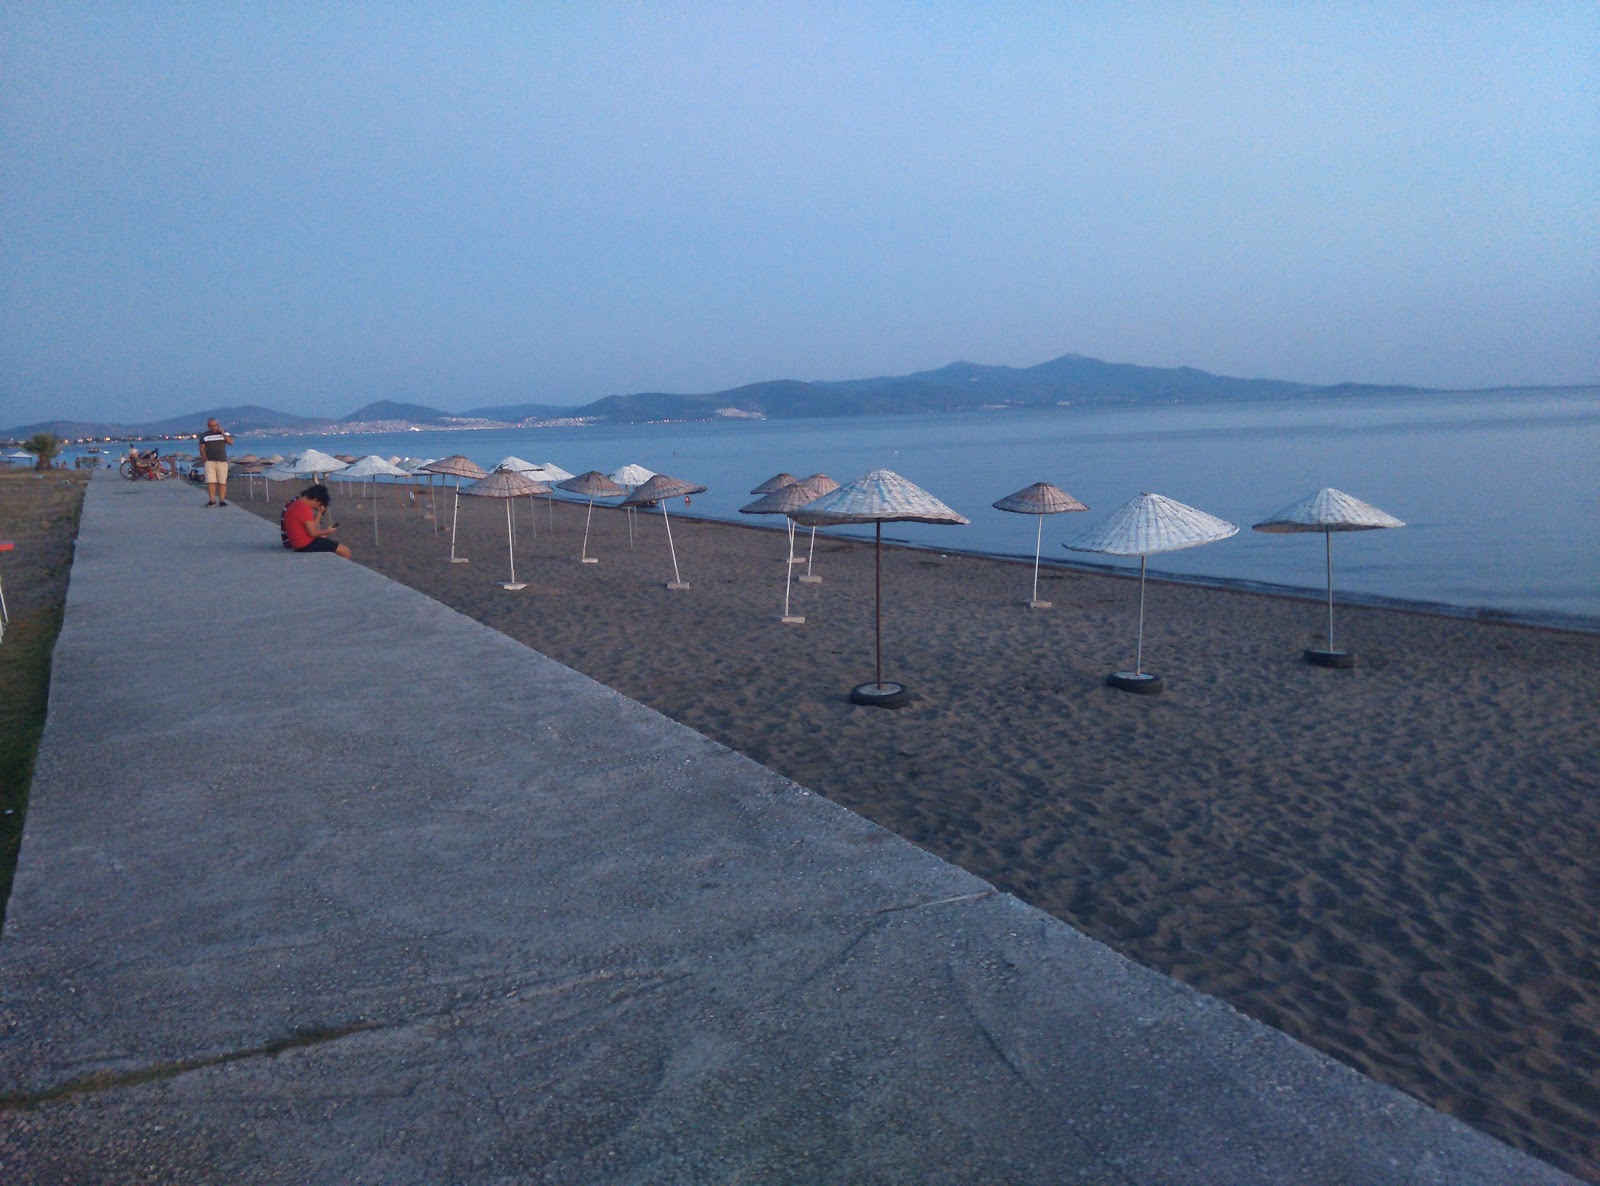 Fotografie cu Cumhuriyet beach - locul popular printre cunoscătorii de relaxare